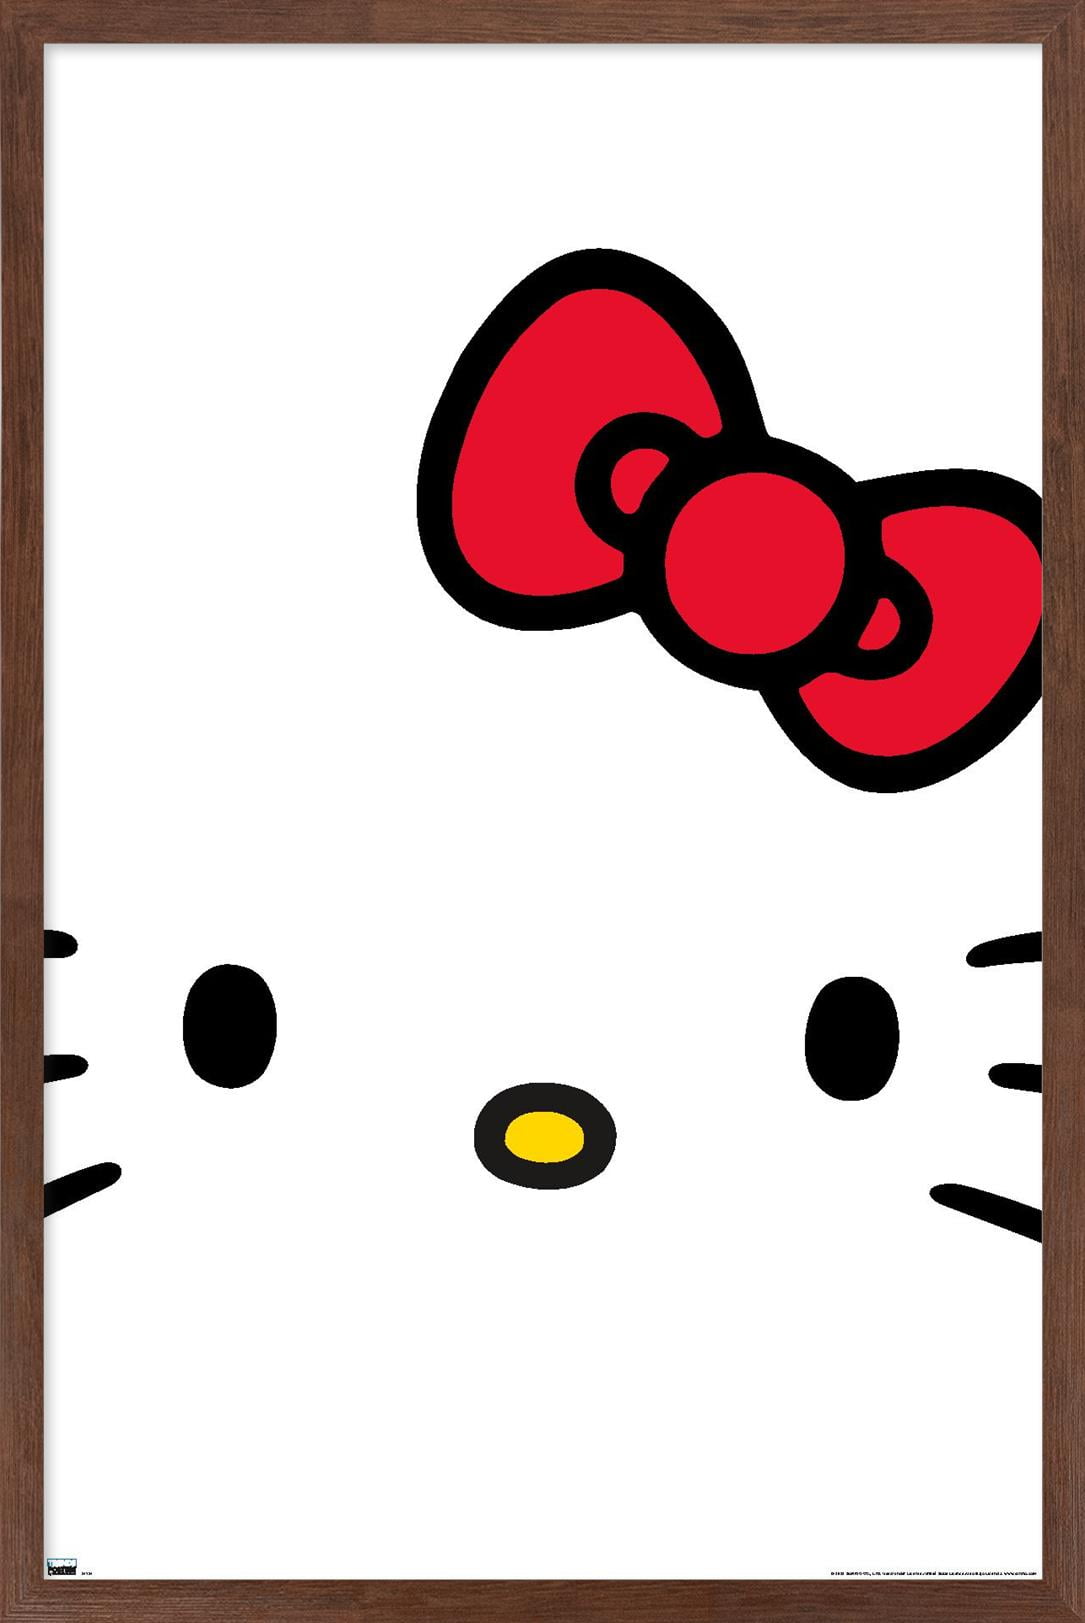 Hello Kitty - Happy Wall Poster, 22.375 x 34, Framed 